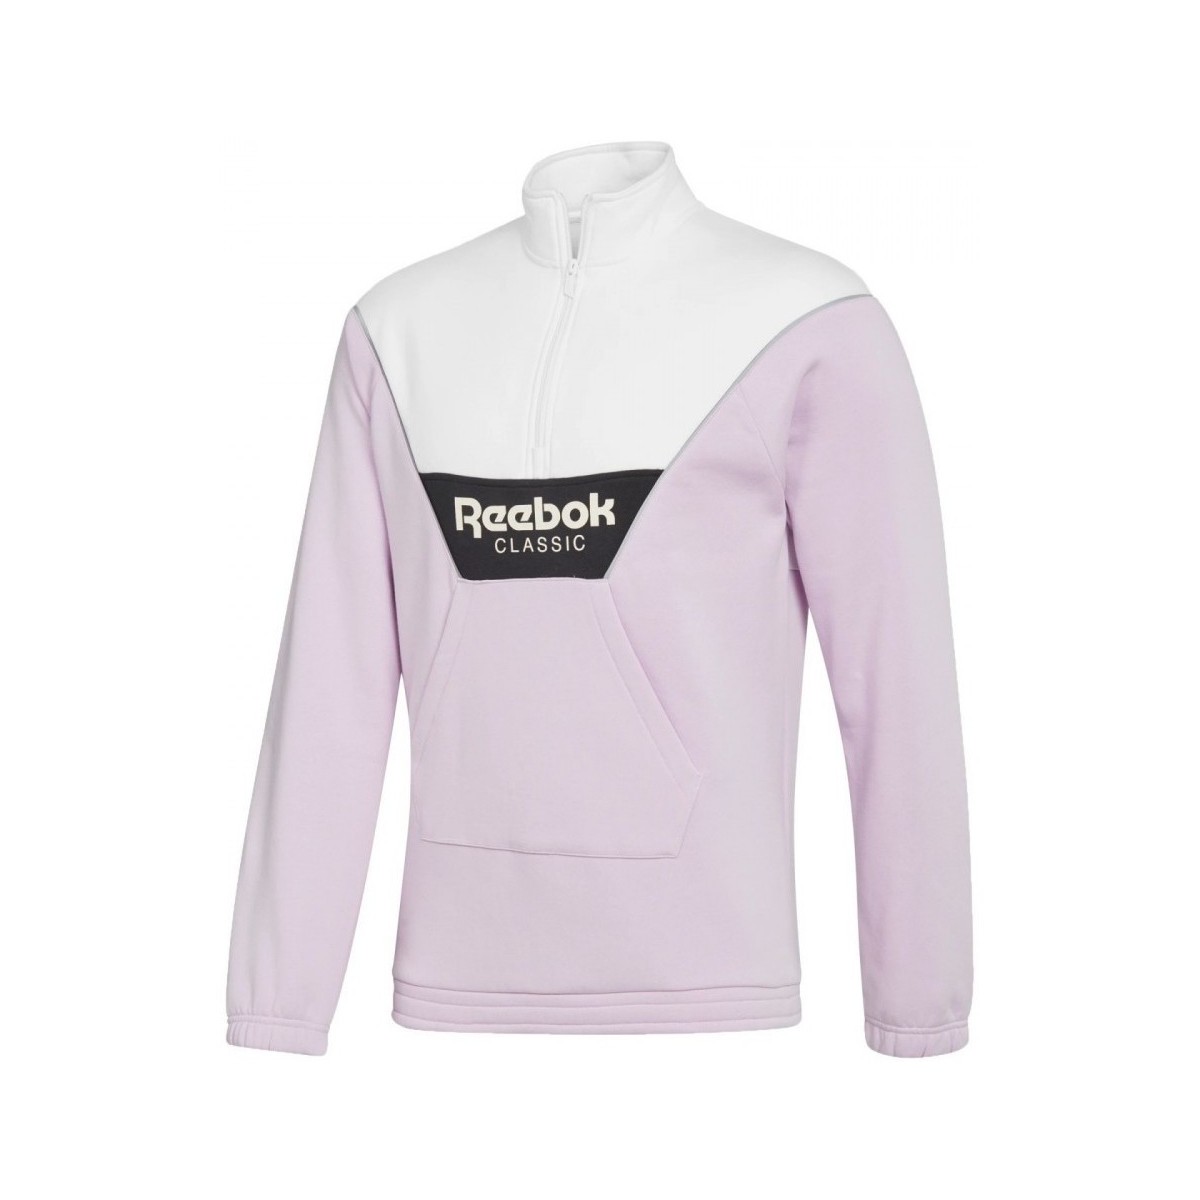 Textiel Heren Sweaters / Sweatshirts Reebok Sport Qqr Hz Unisex Cover Up Violet